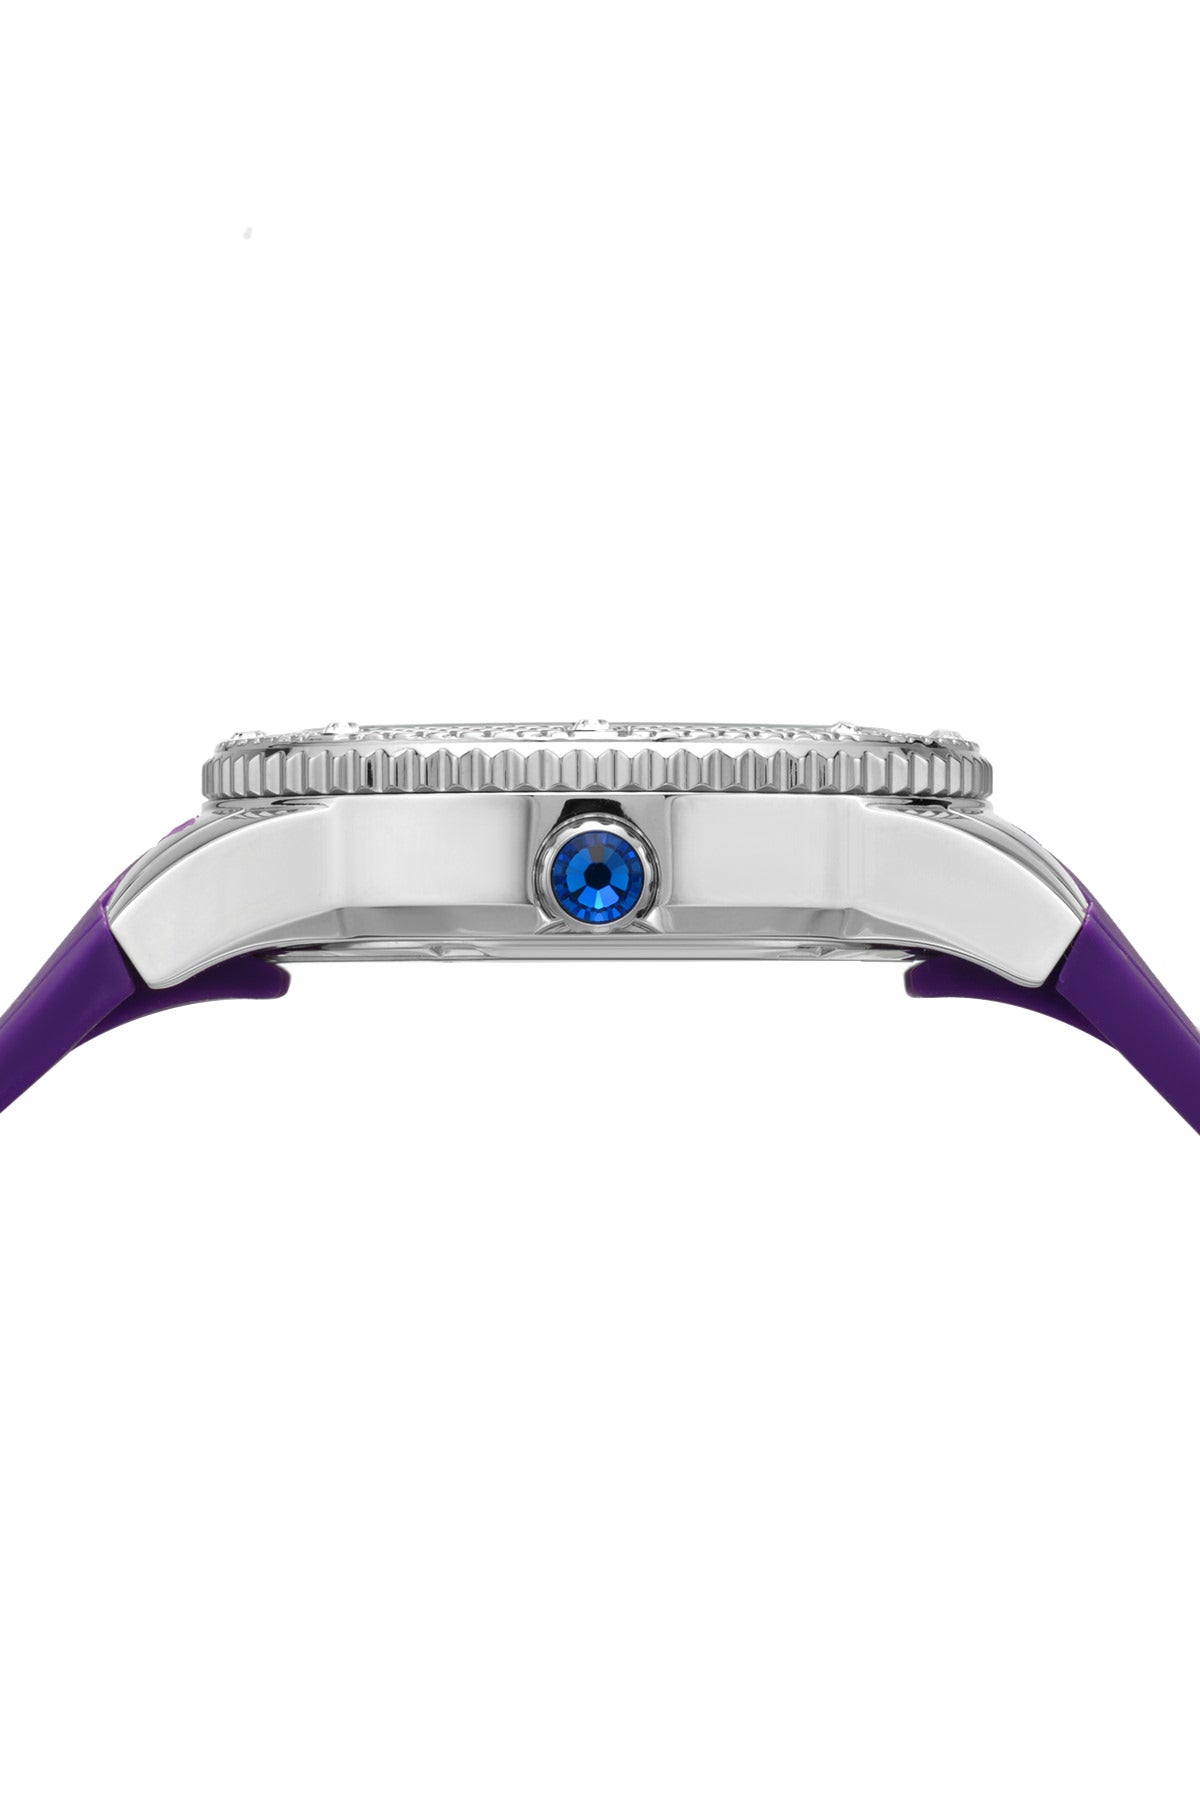 Porsamo Bleu Linda luxury women's watch, silicone strap, silver, purple 493CLIR